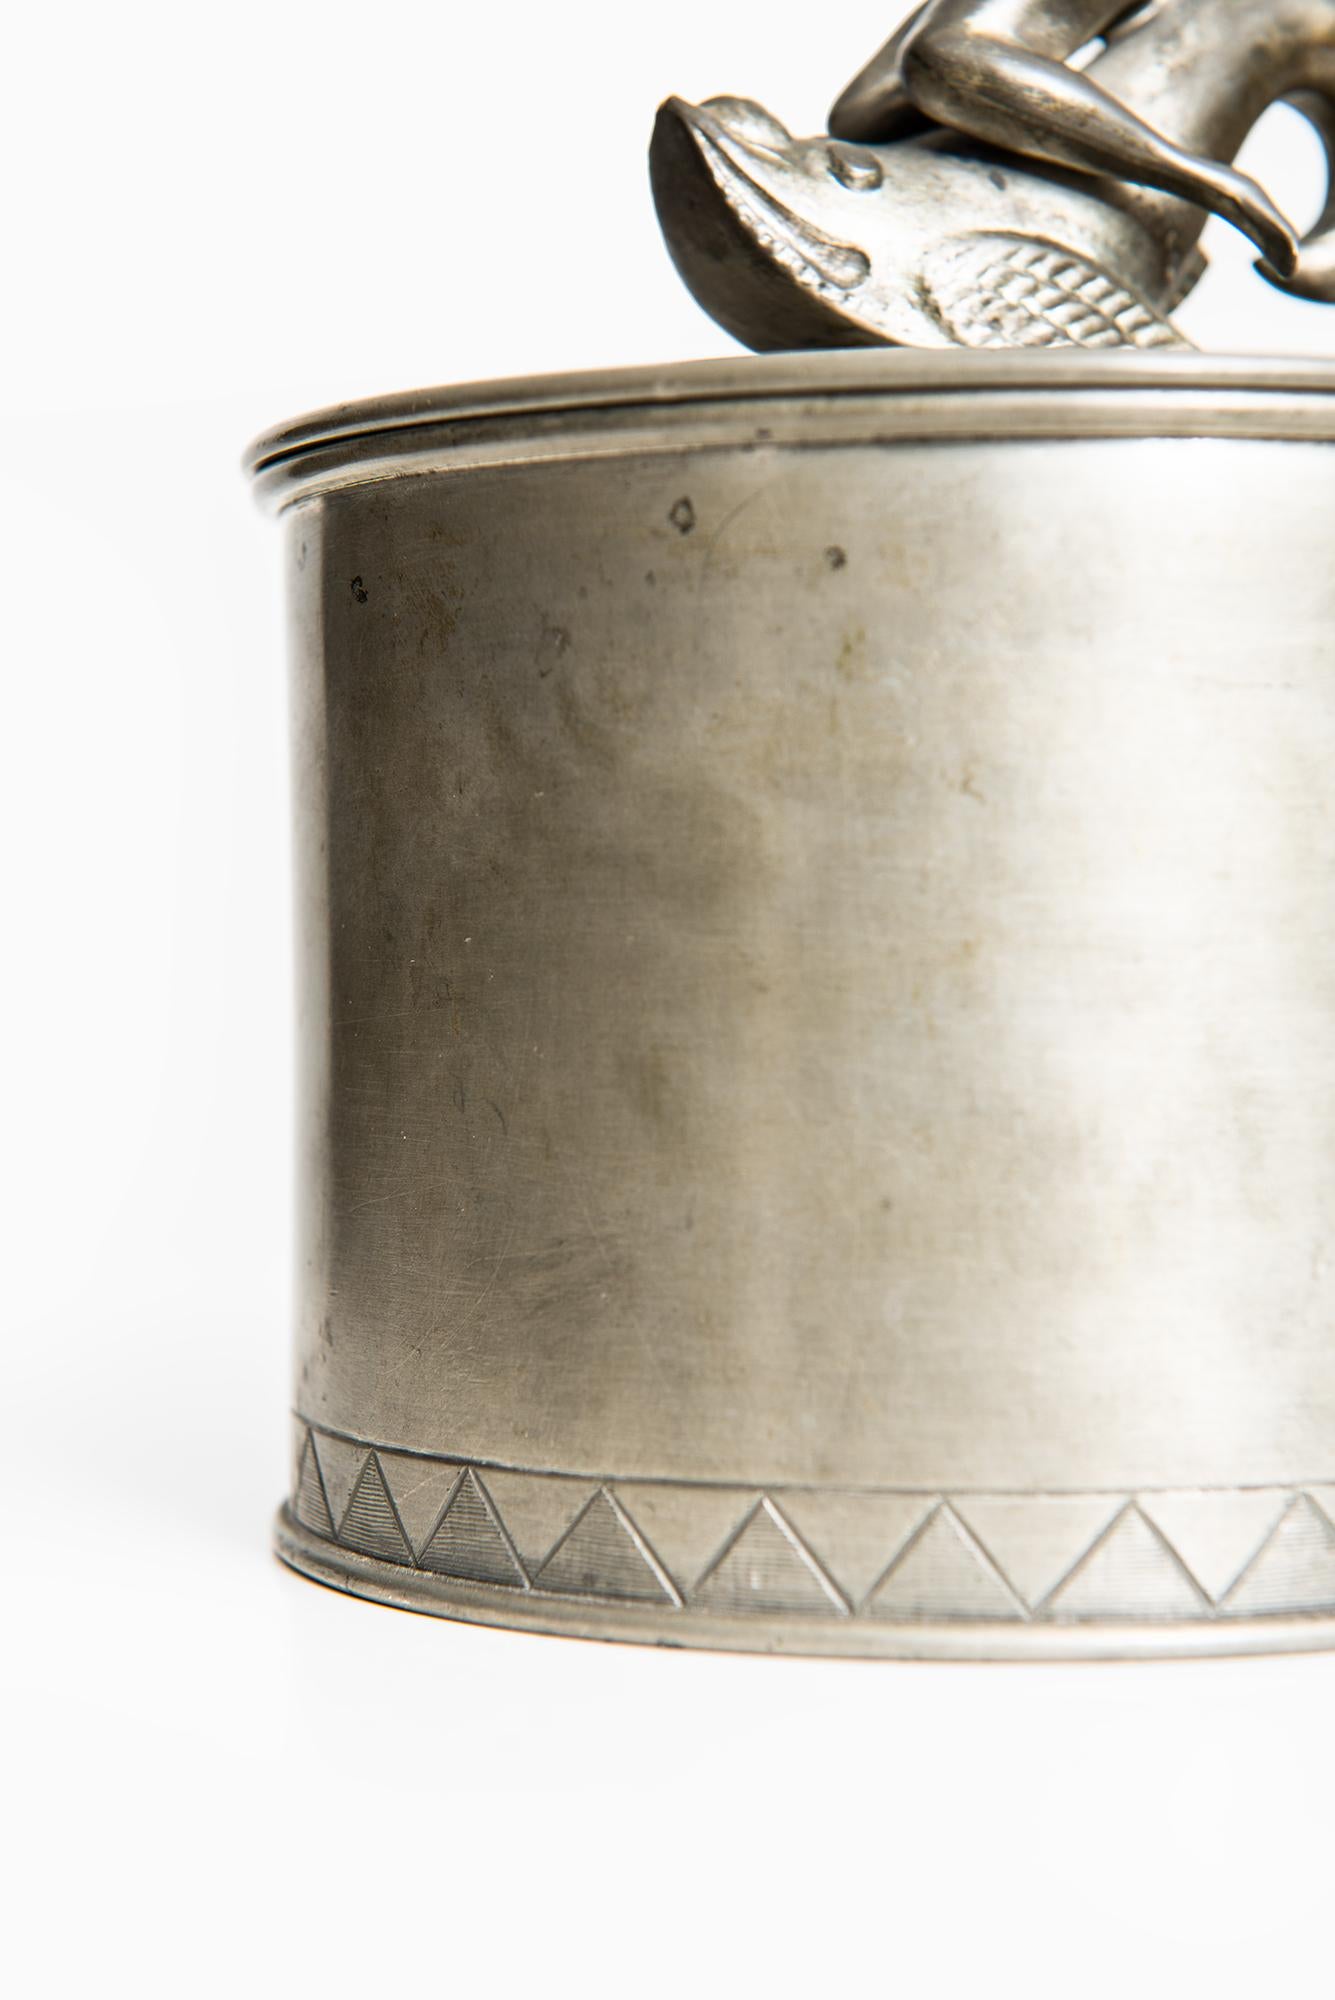 Scandinavian Modern Pewter Jar Produced by Svenskt Tenn in Sweden